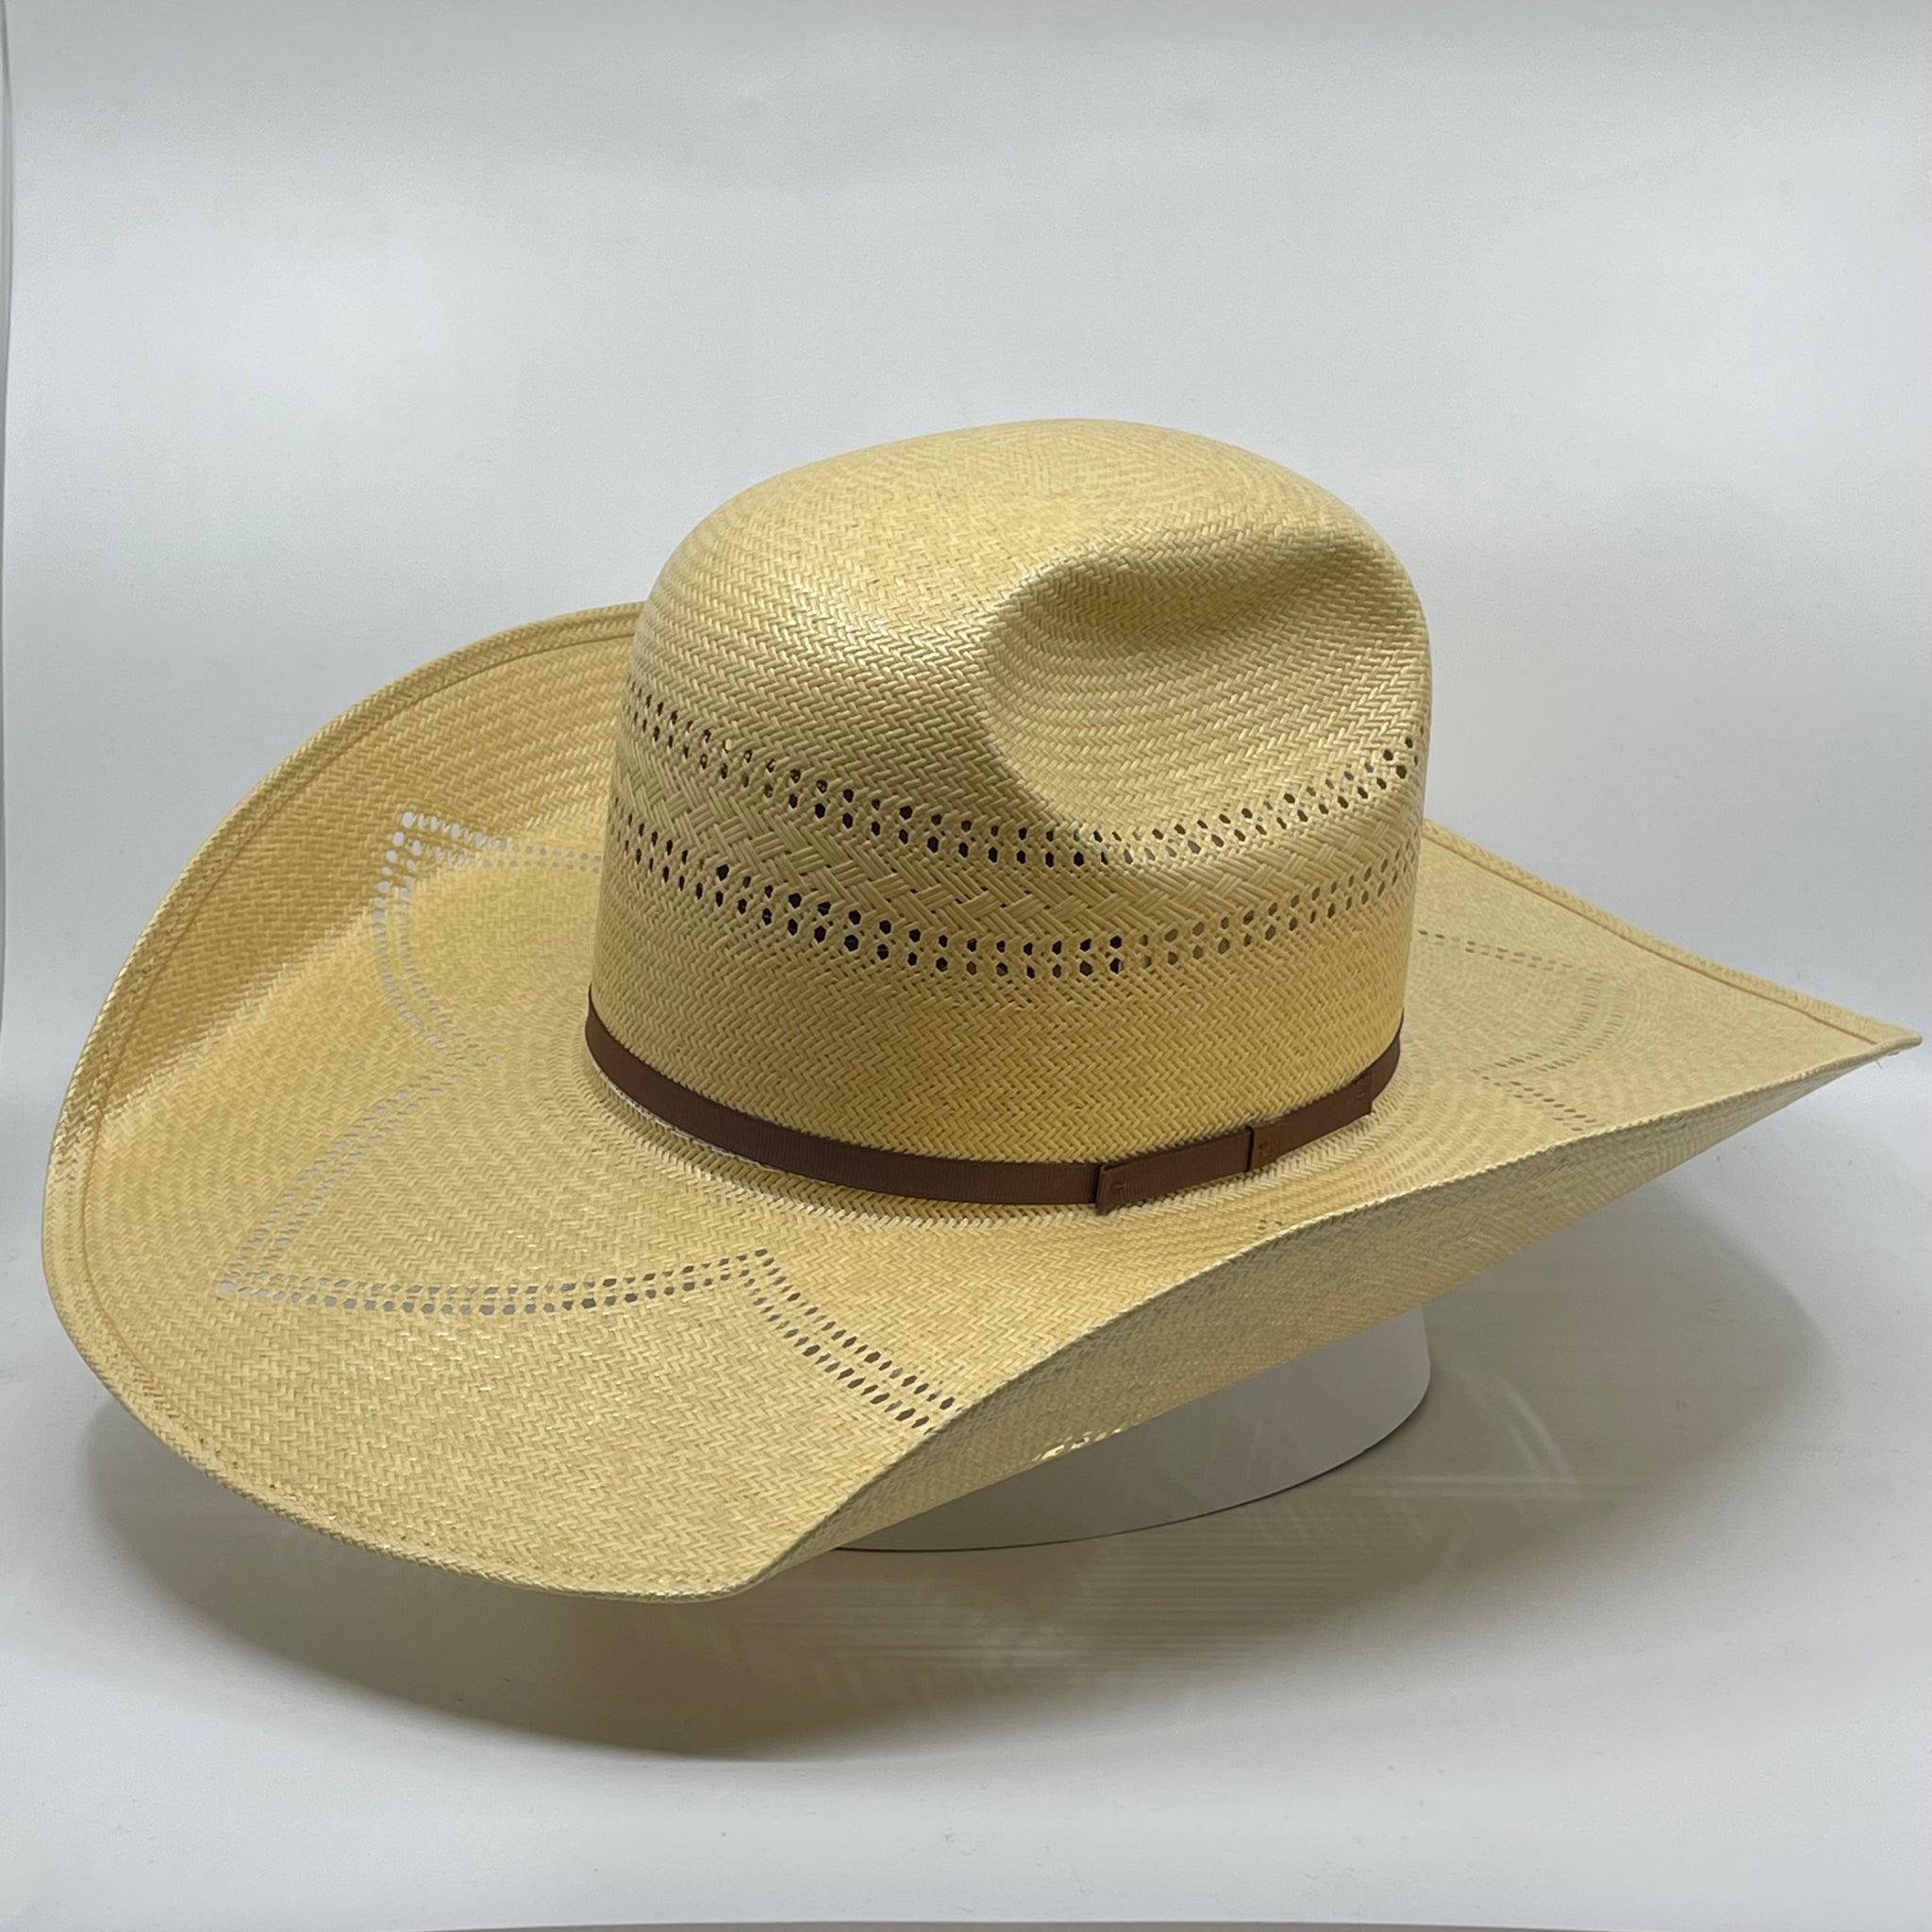 Biggar Hats "Jester Gold" Straw Hat (5 Inch Brim)